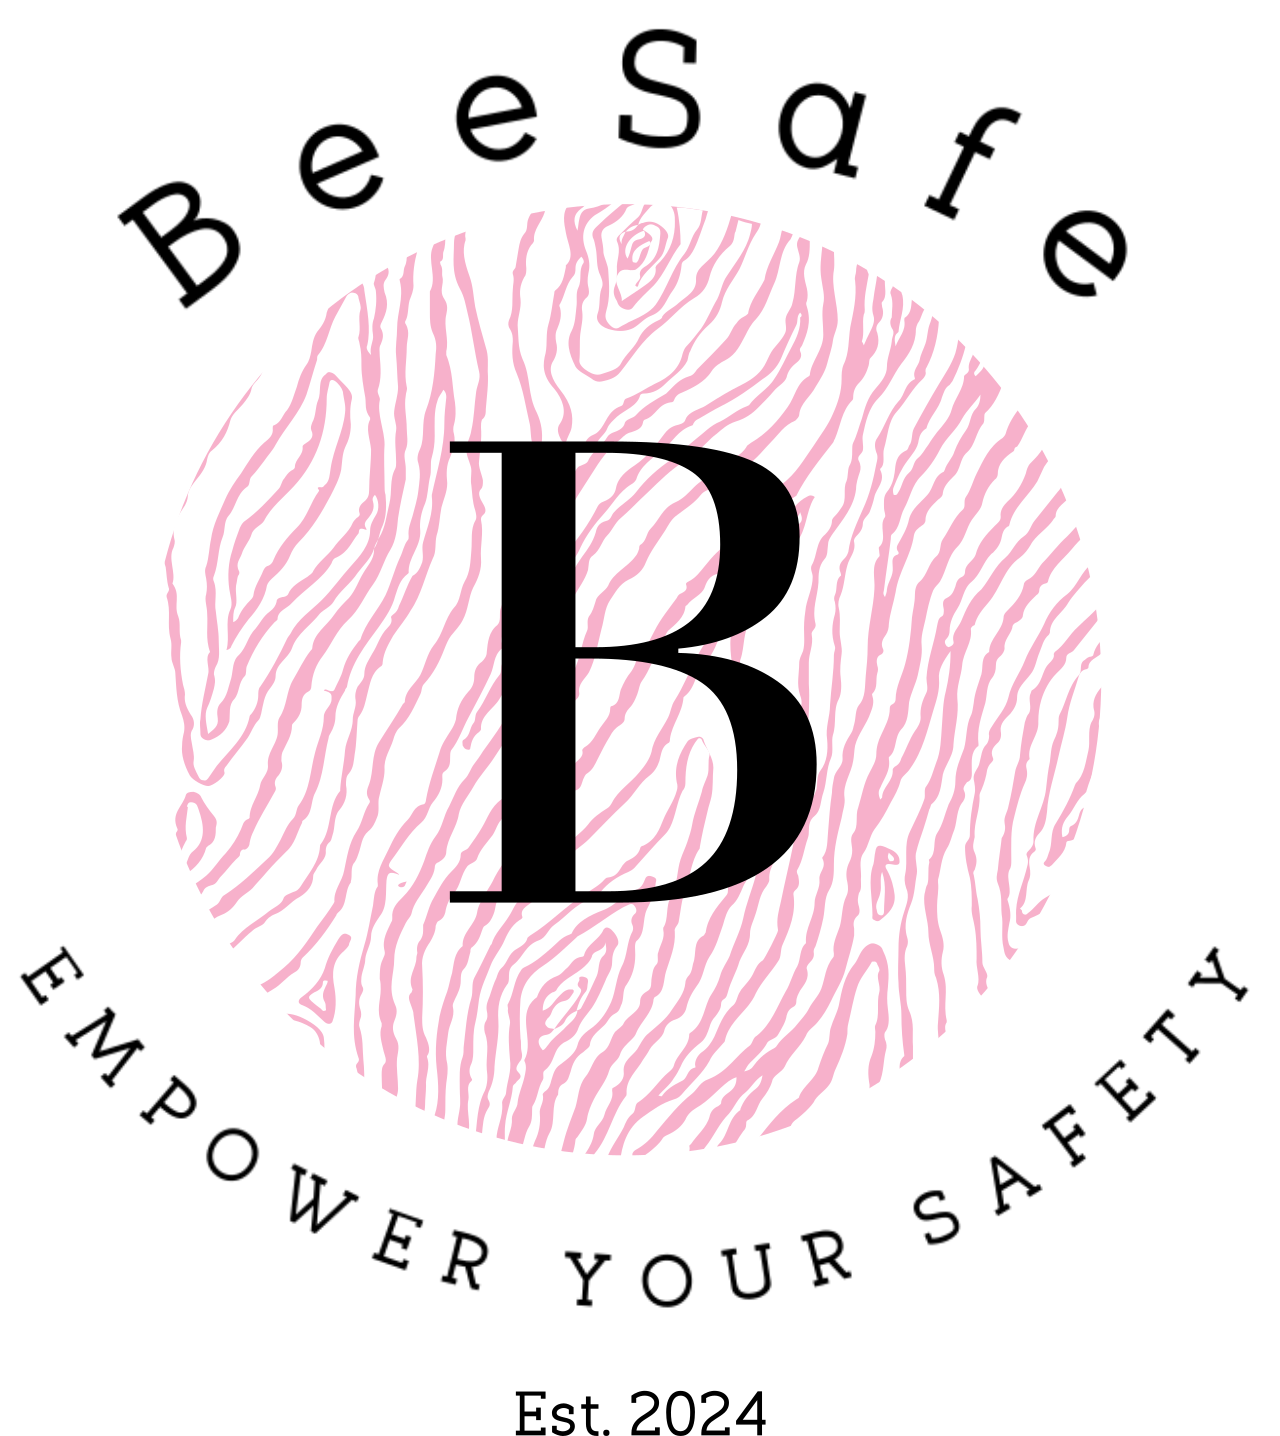 BeeSafe's logo